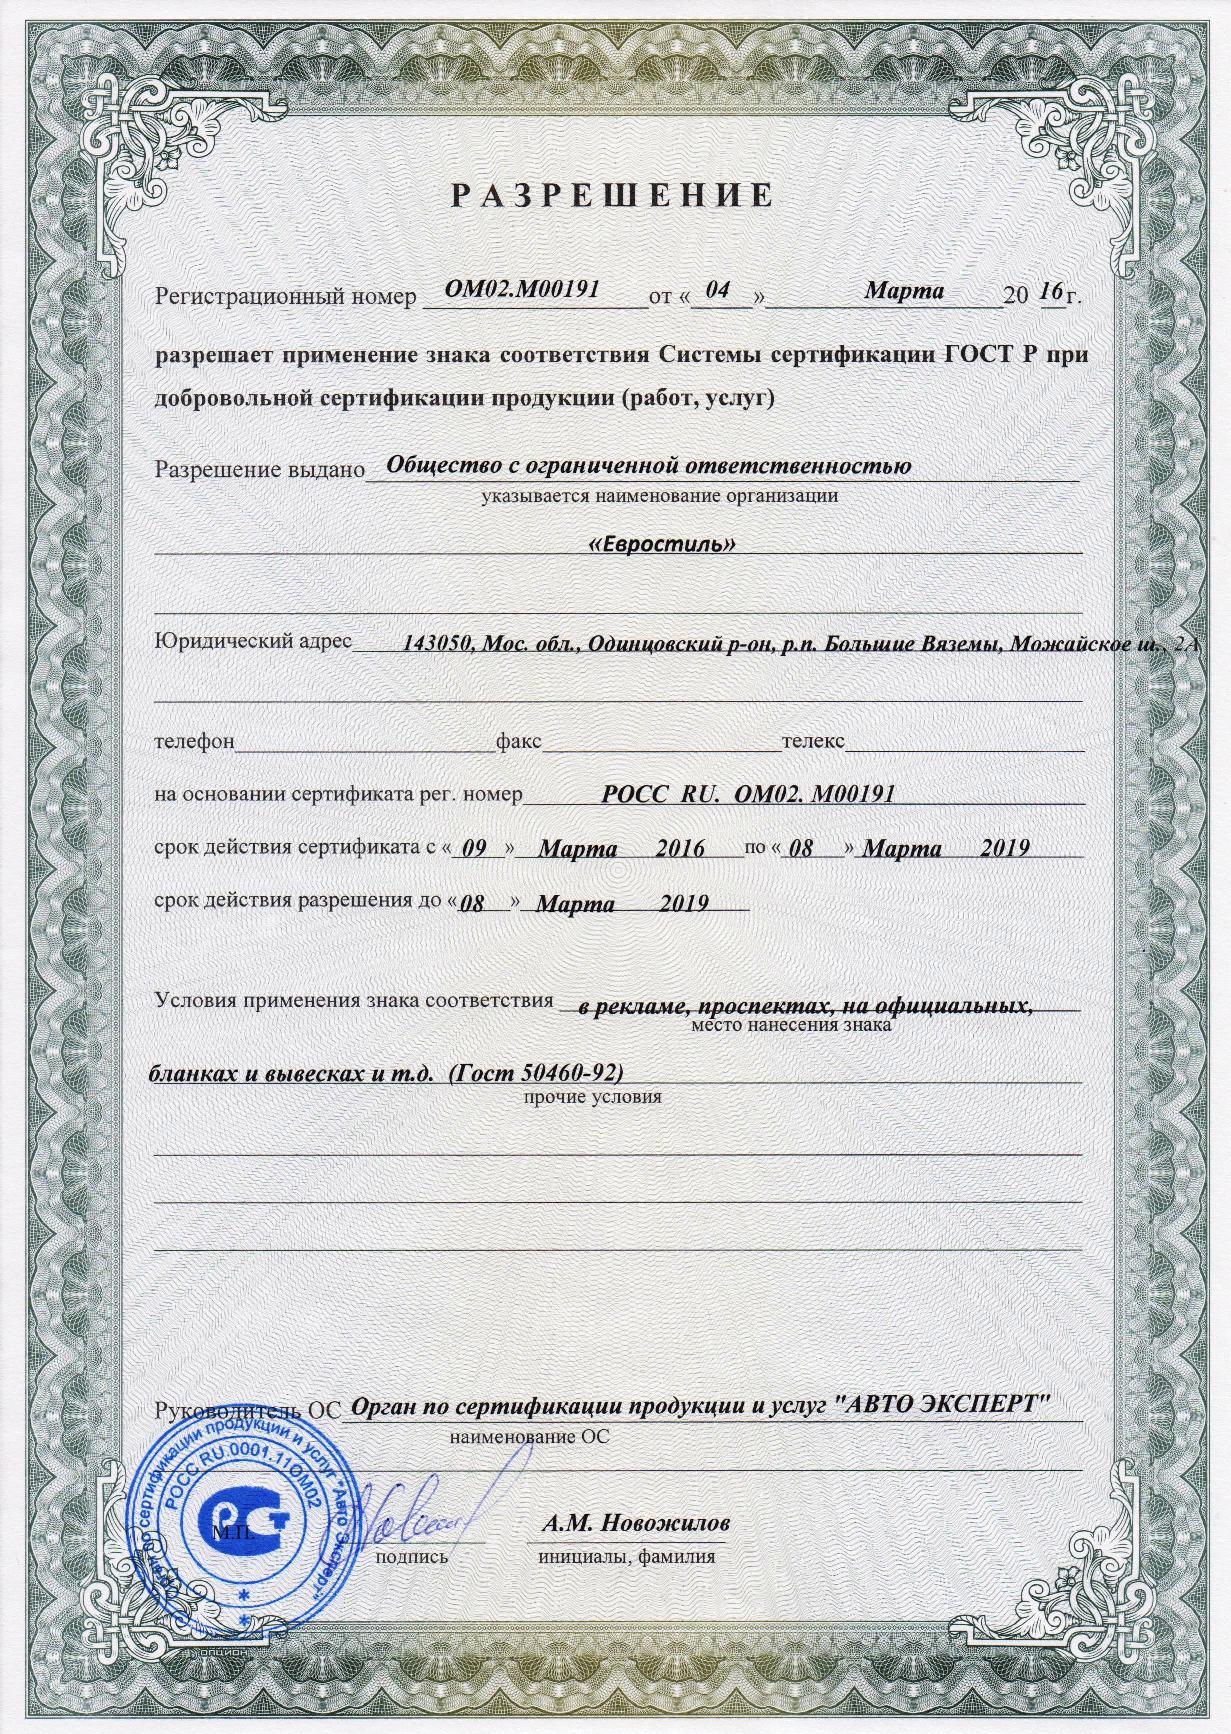 install-certificate-3